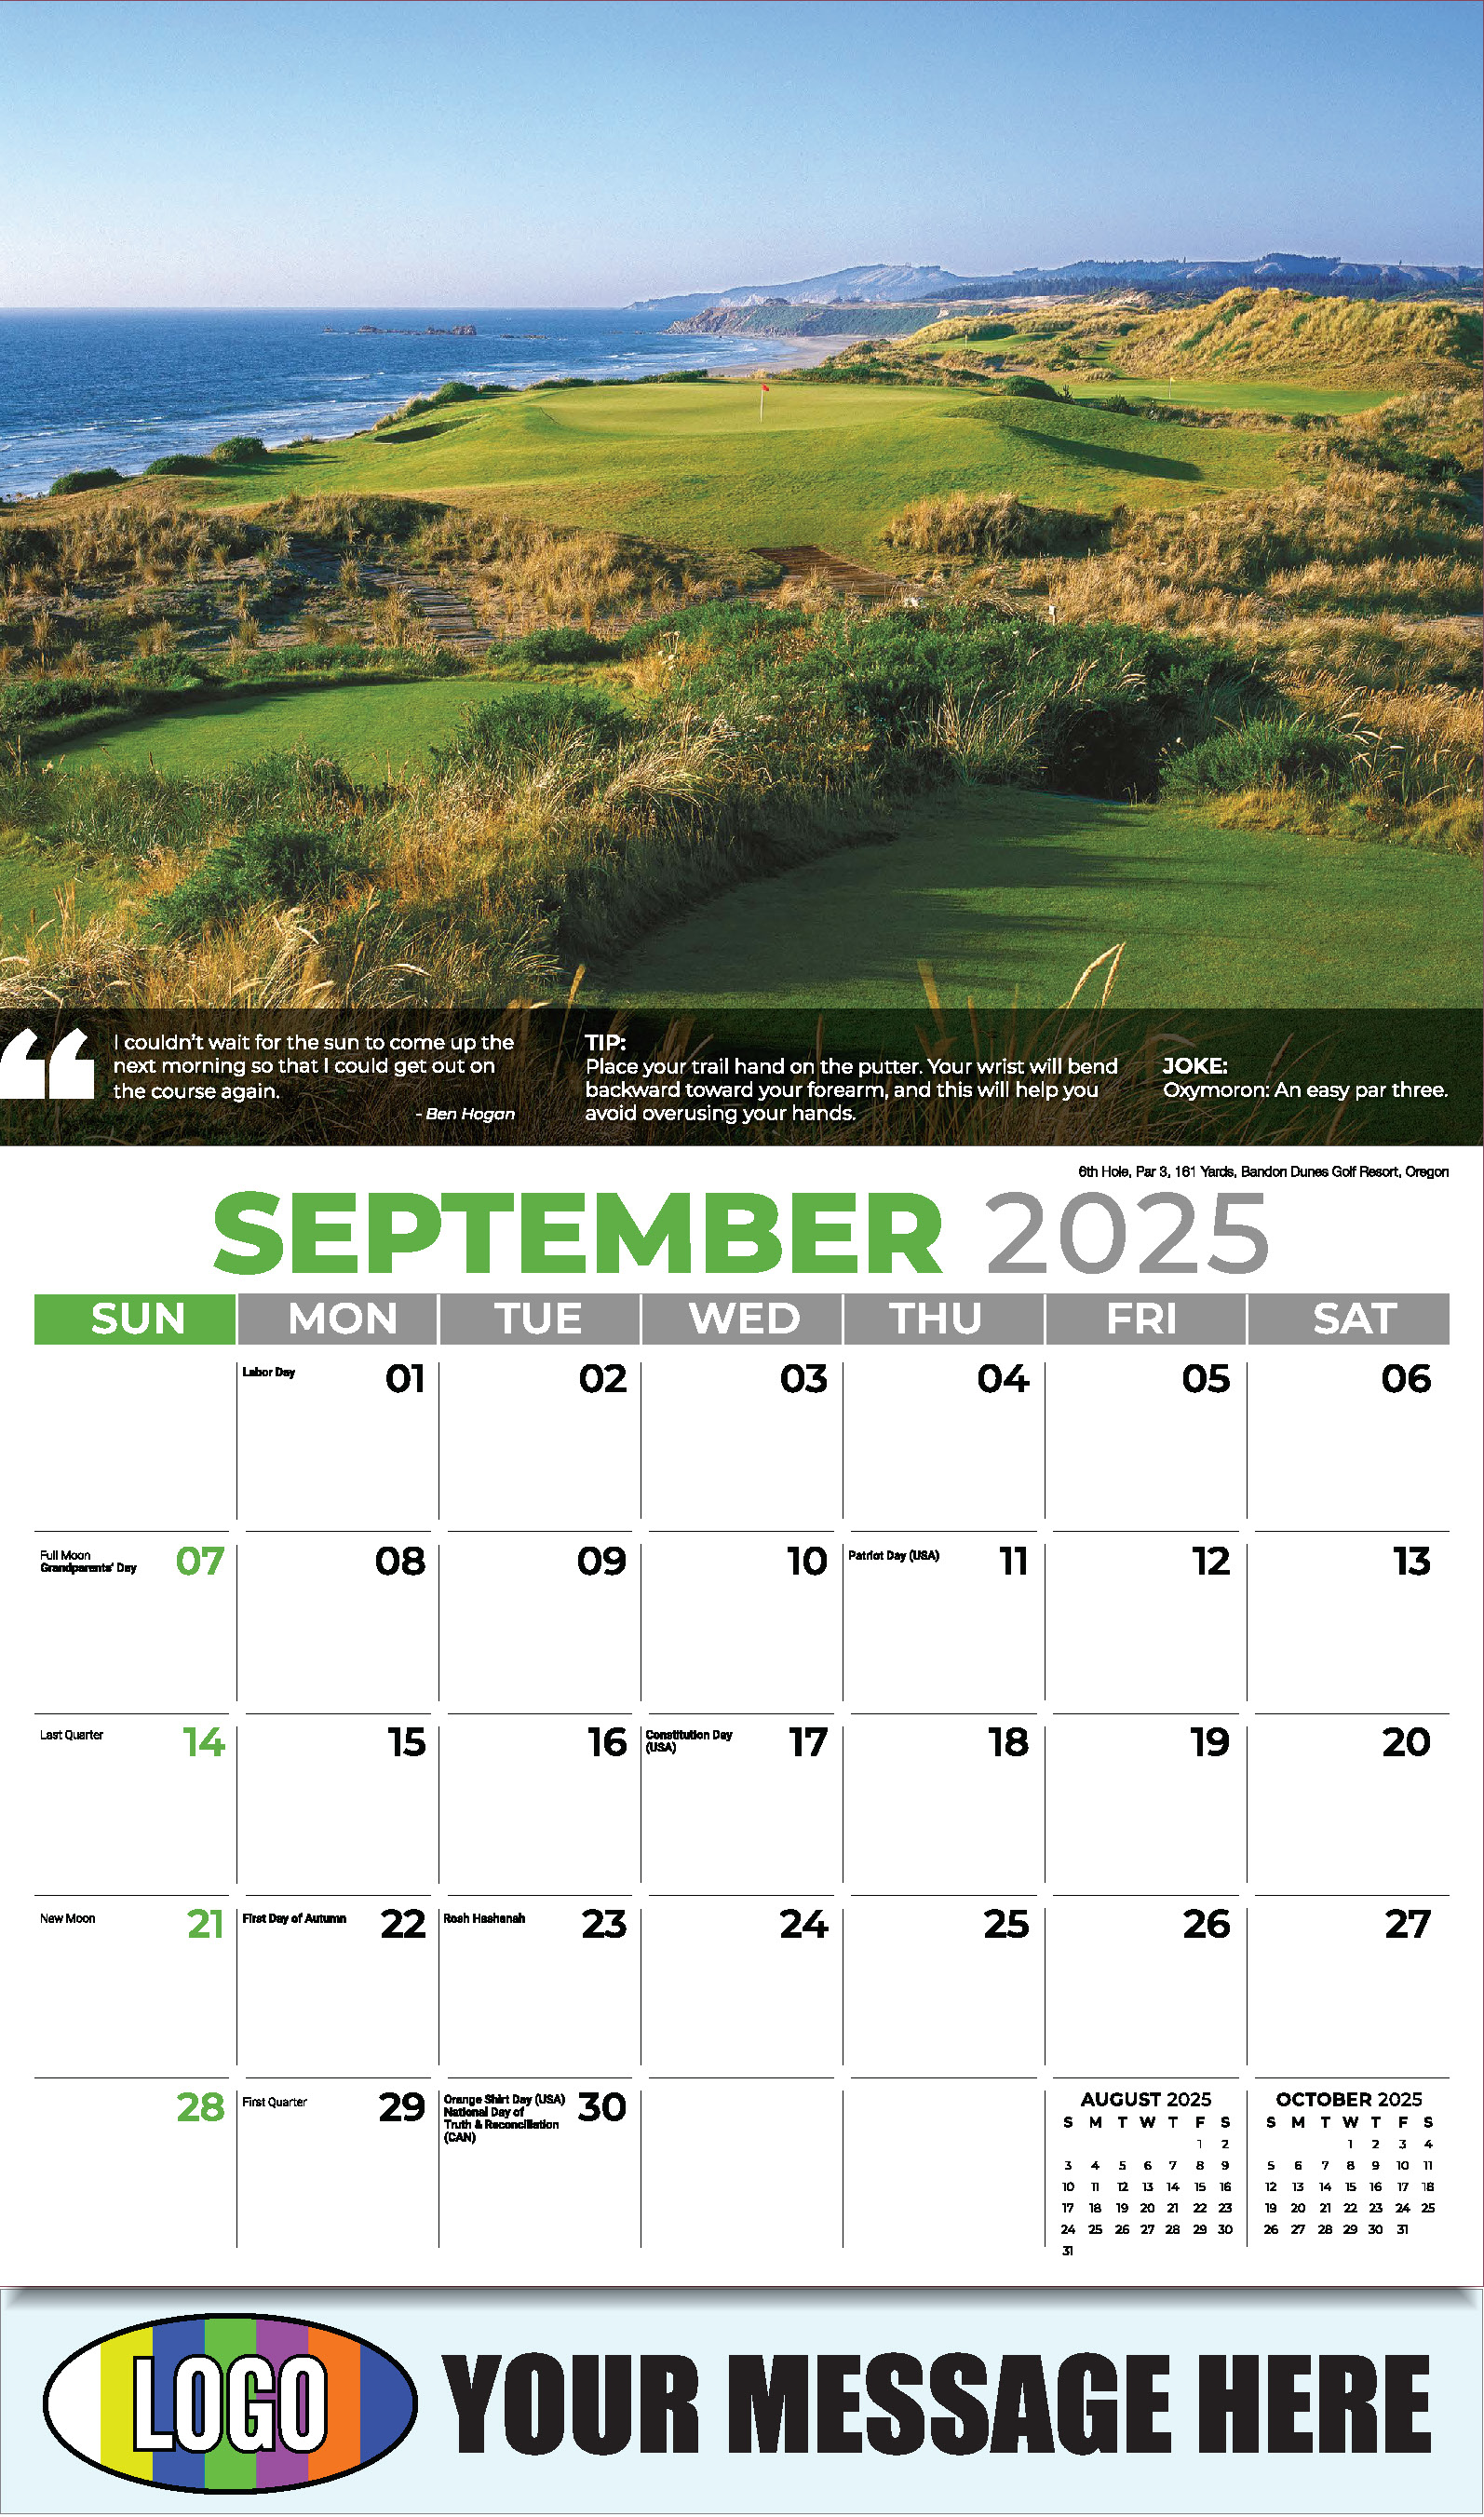 Golf Tips 2025 Business Promo Calendar - September